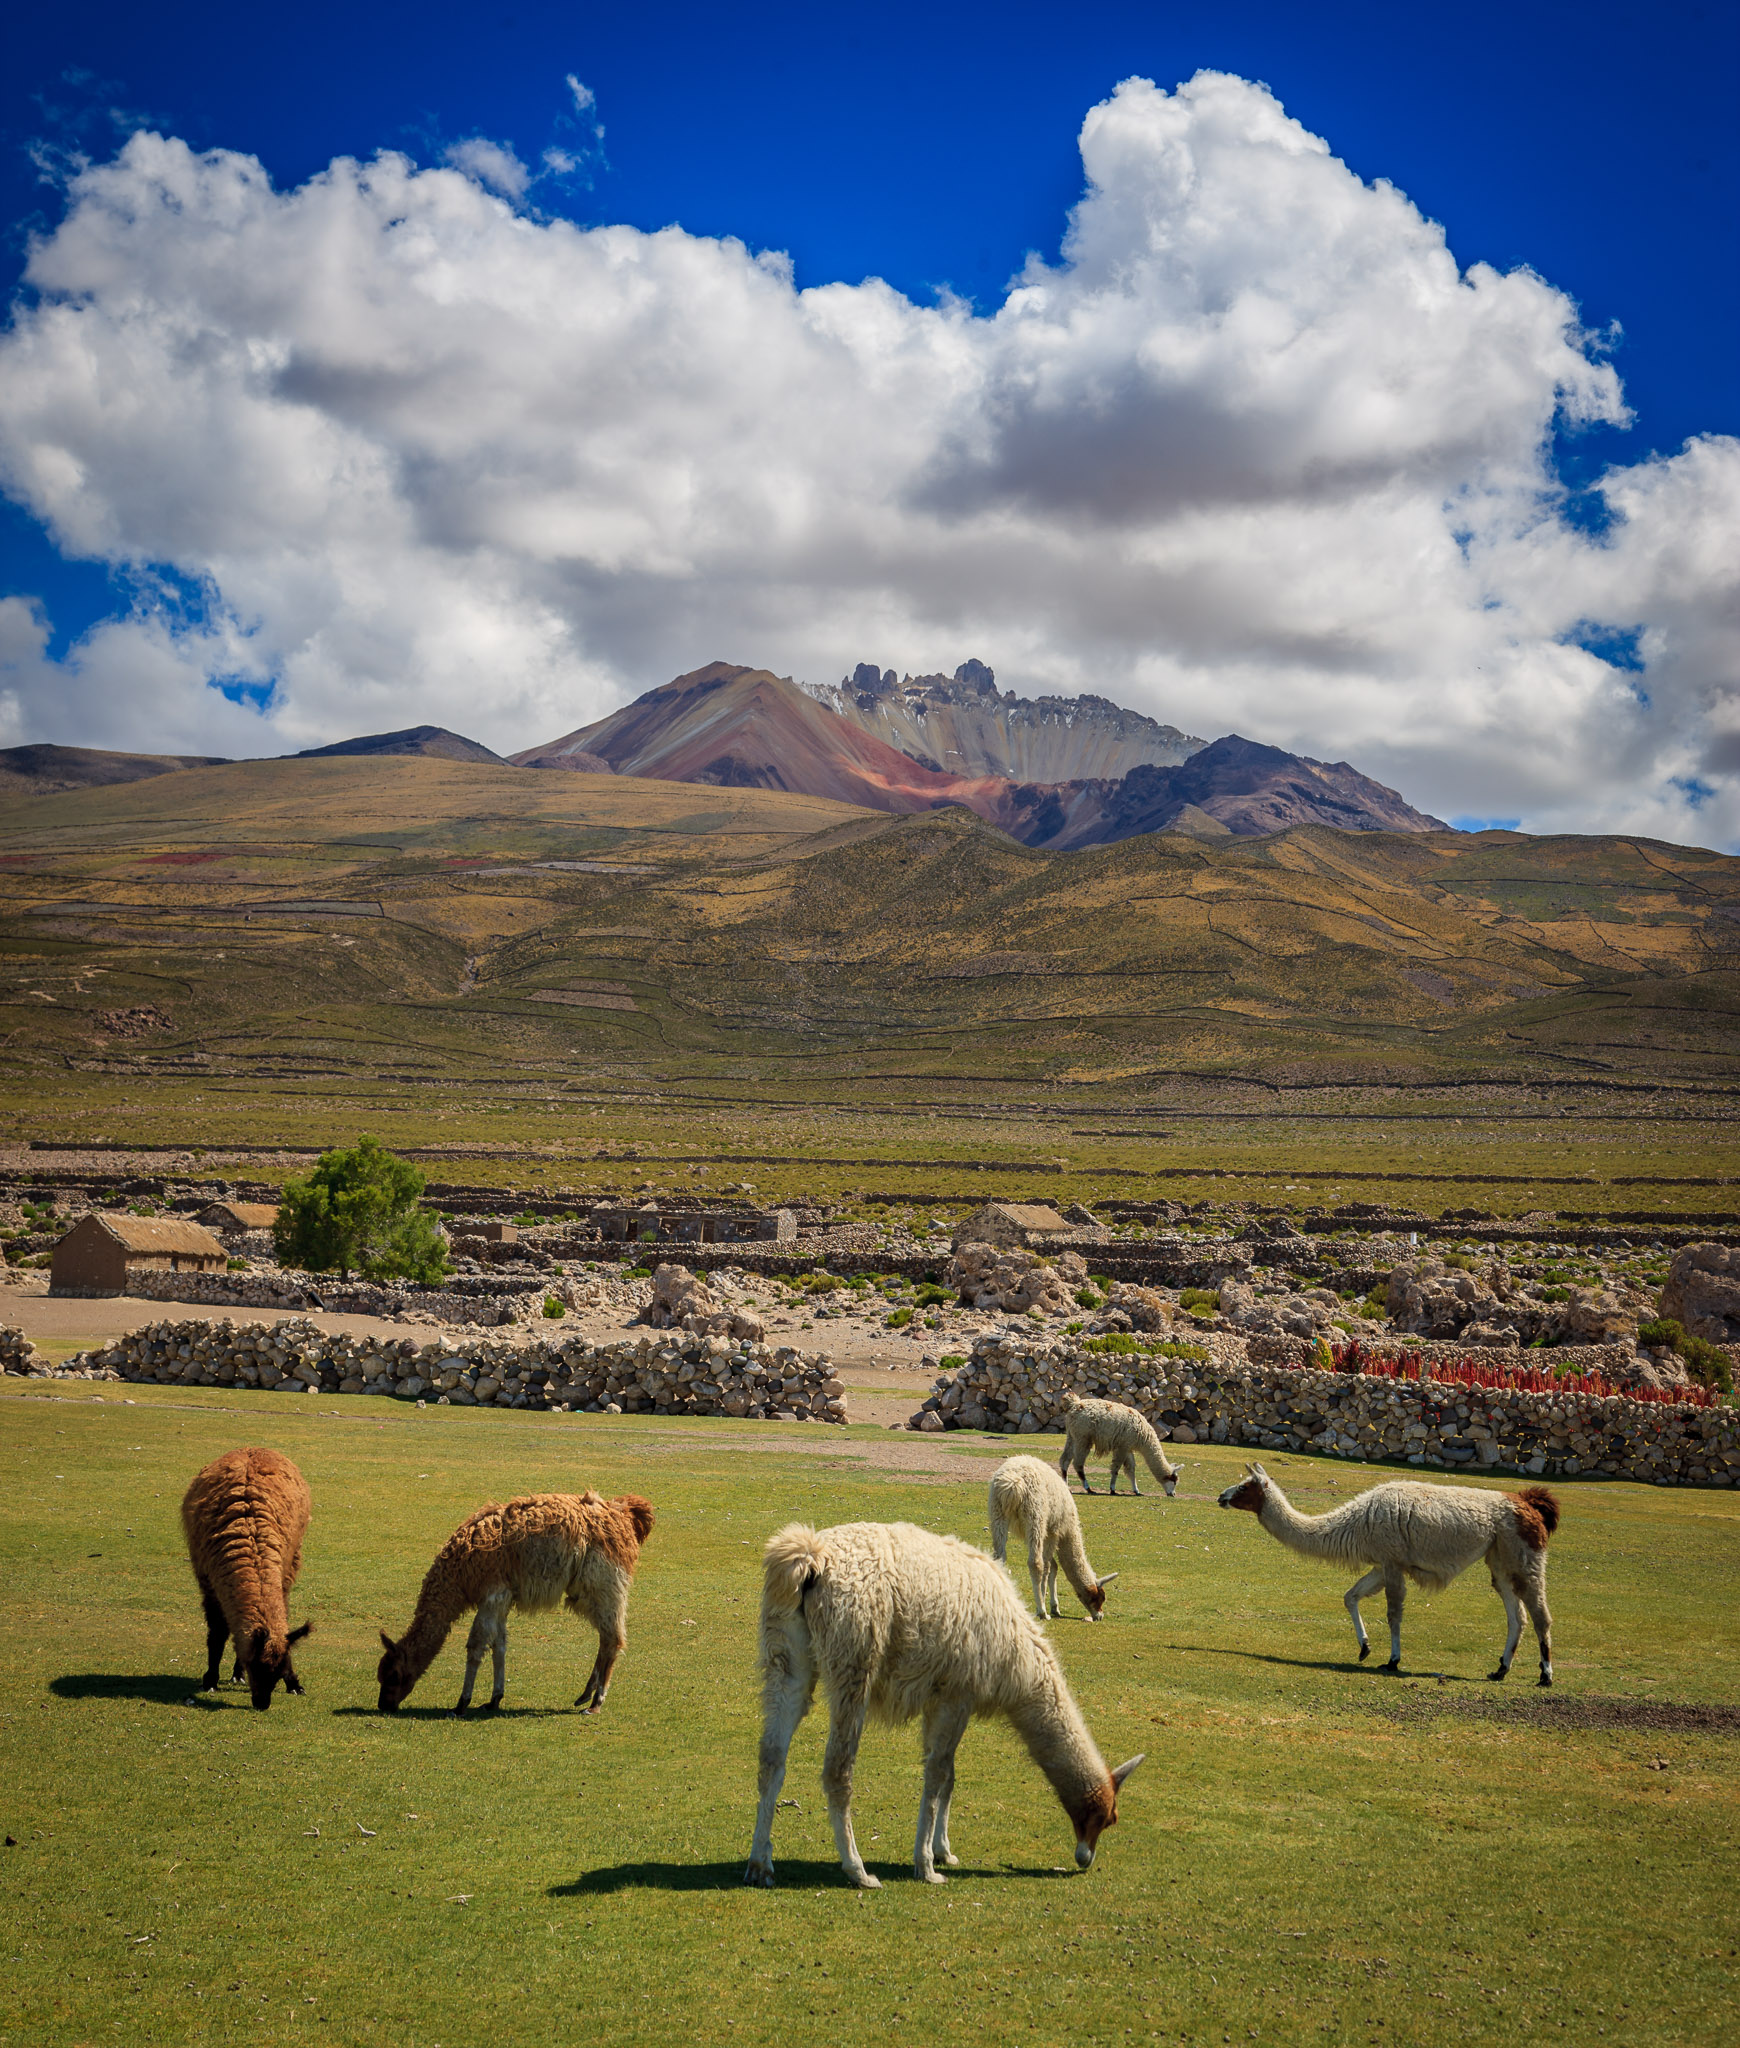 Llama grazing below Volcan Tunupa